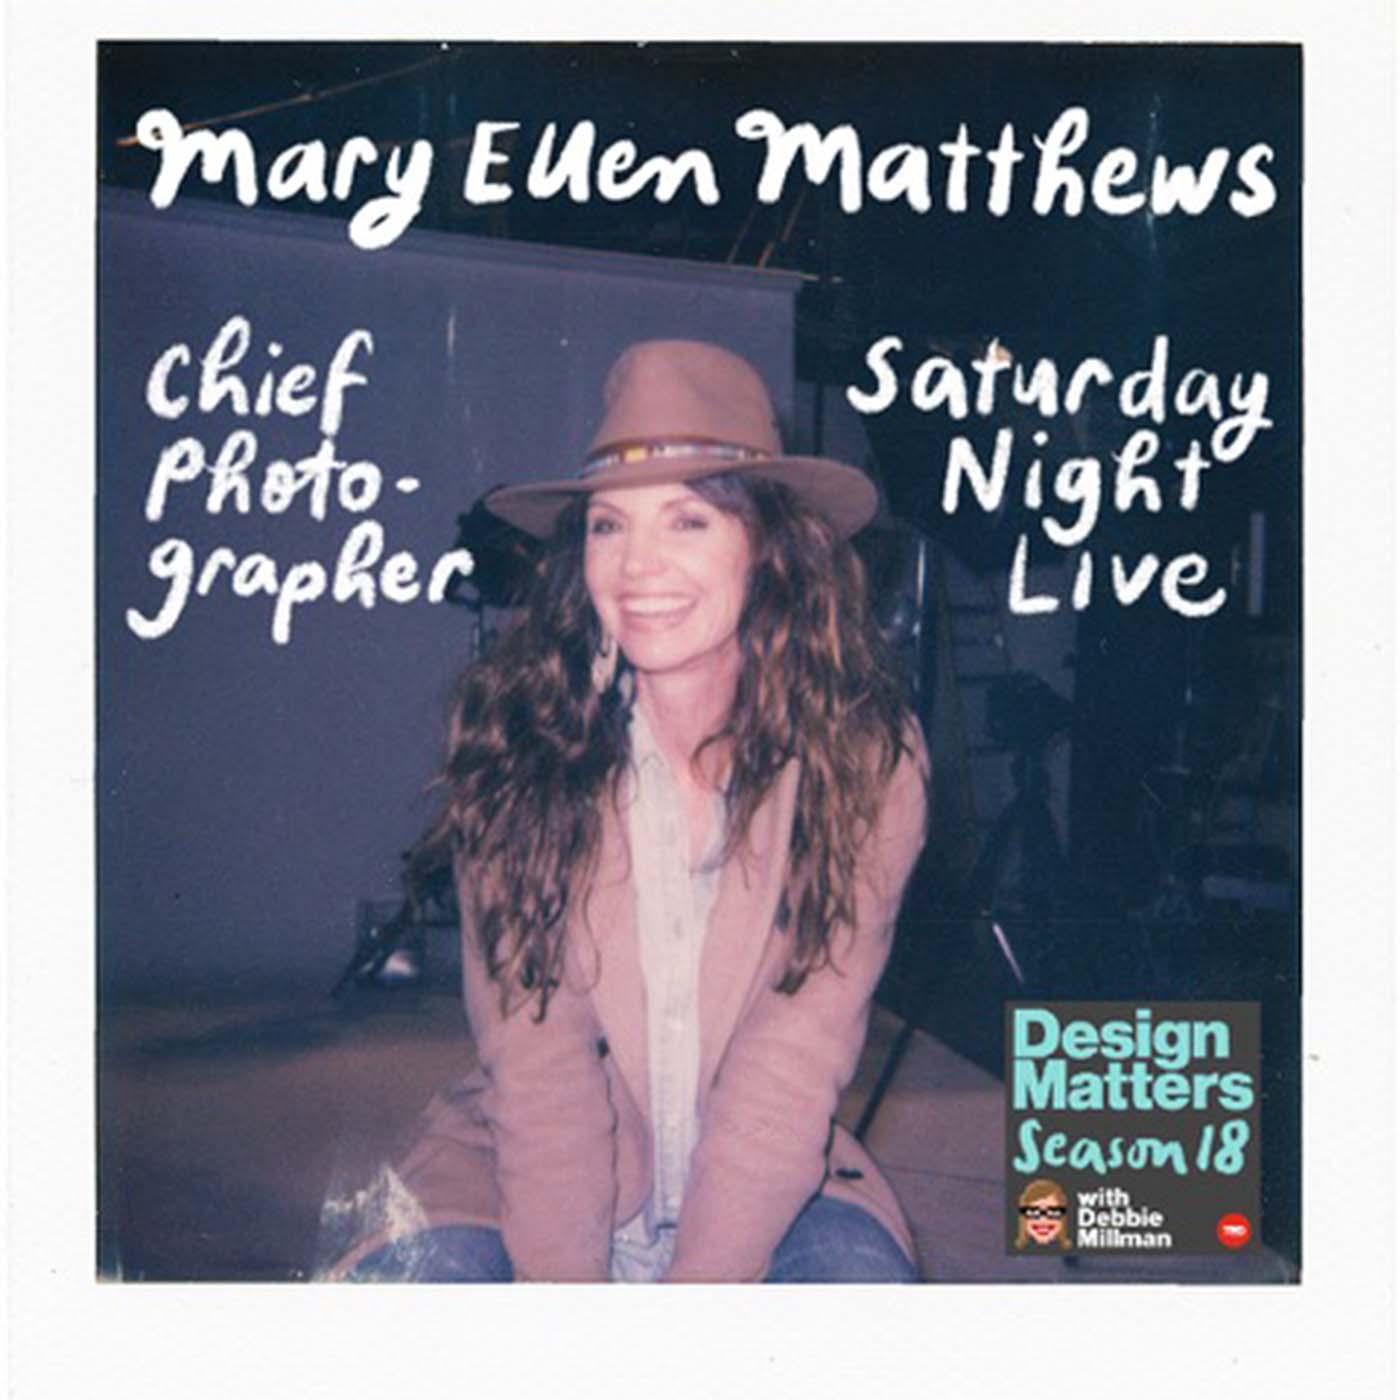 Thumbnail for "Mary Ellen Matthews".